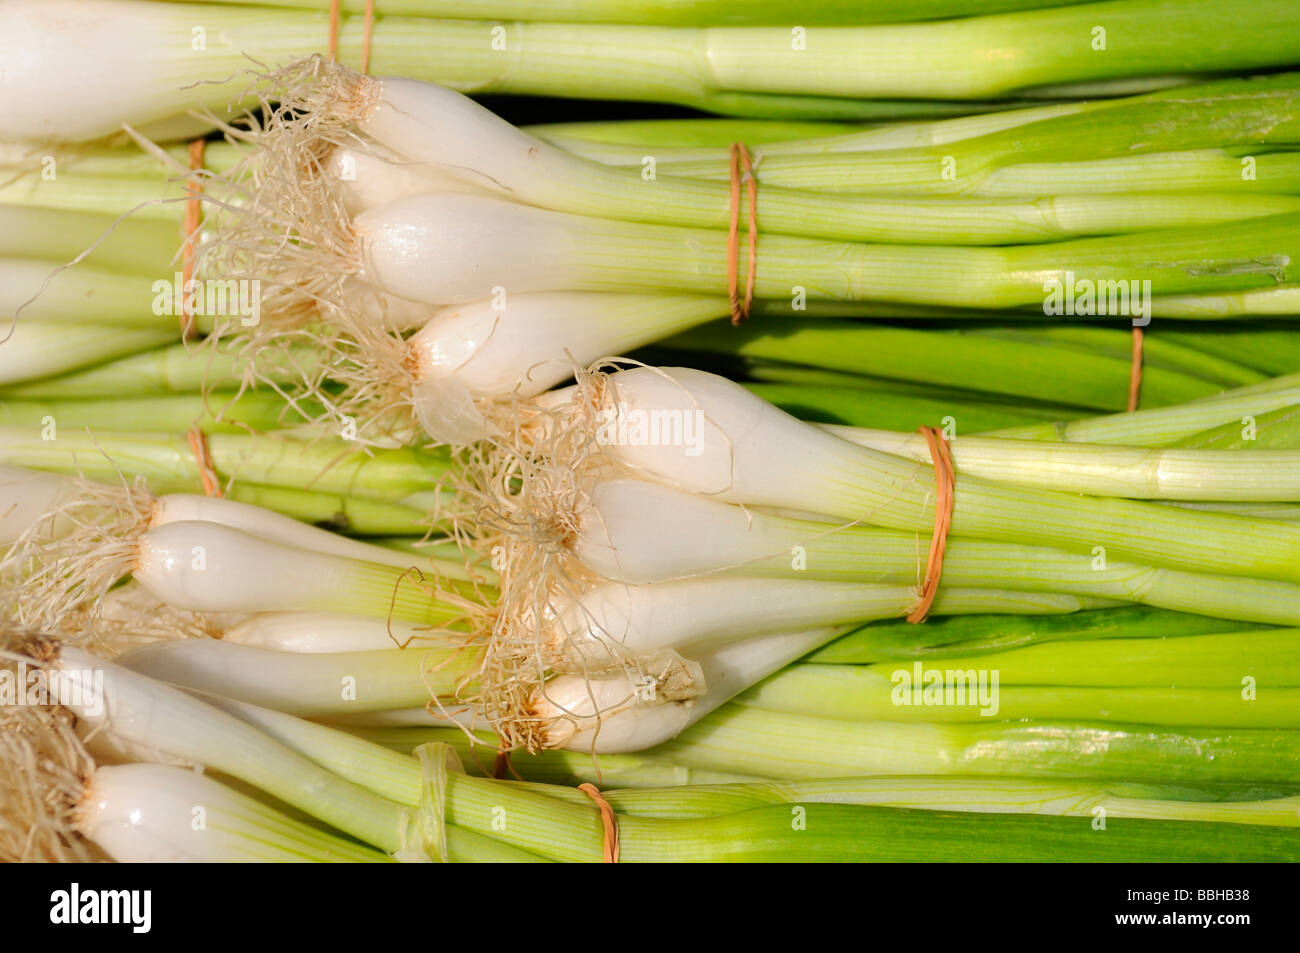 Bunches of Spring Onions (Allium fistulosum), ready for sale Stock Photo